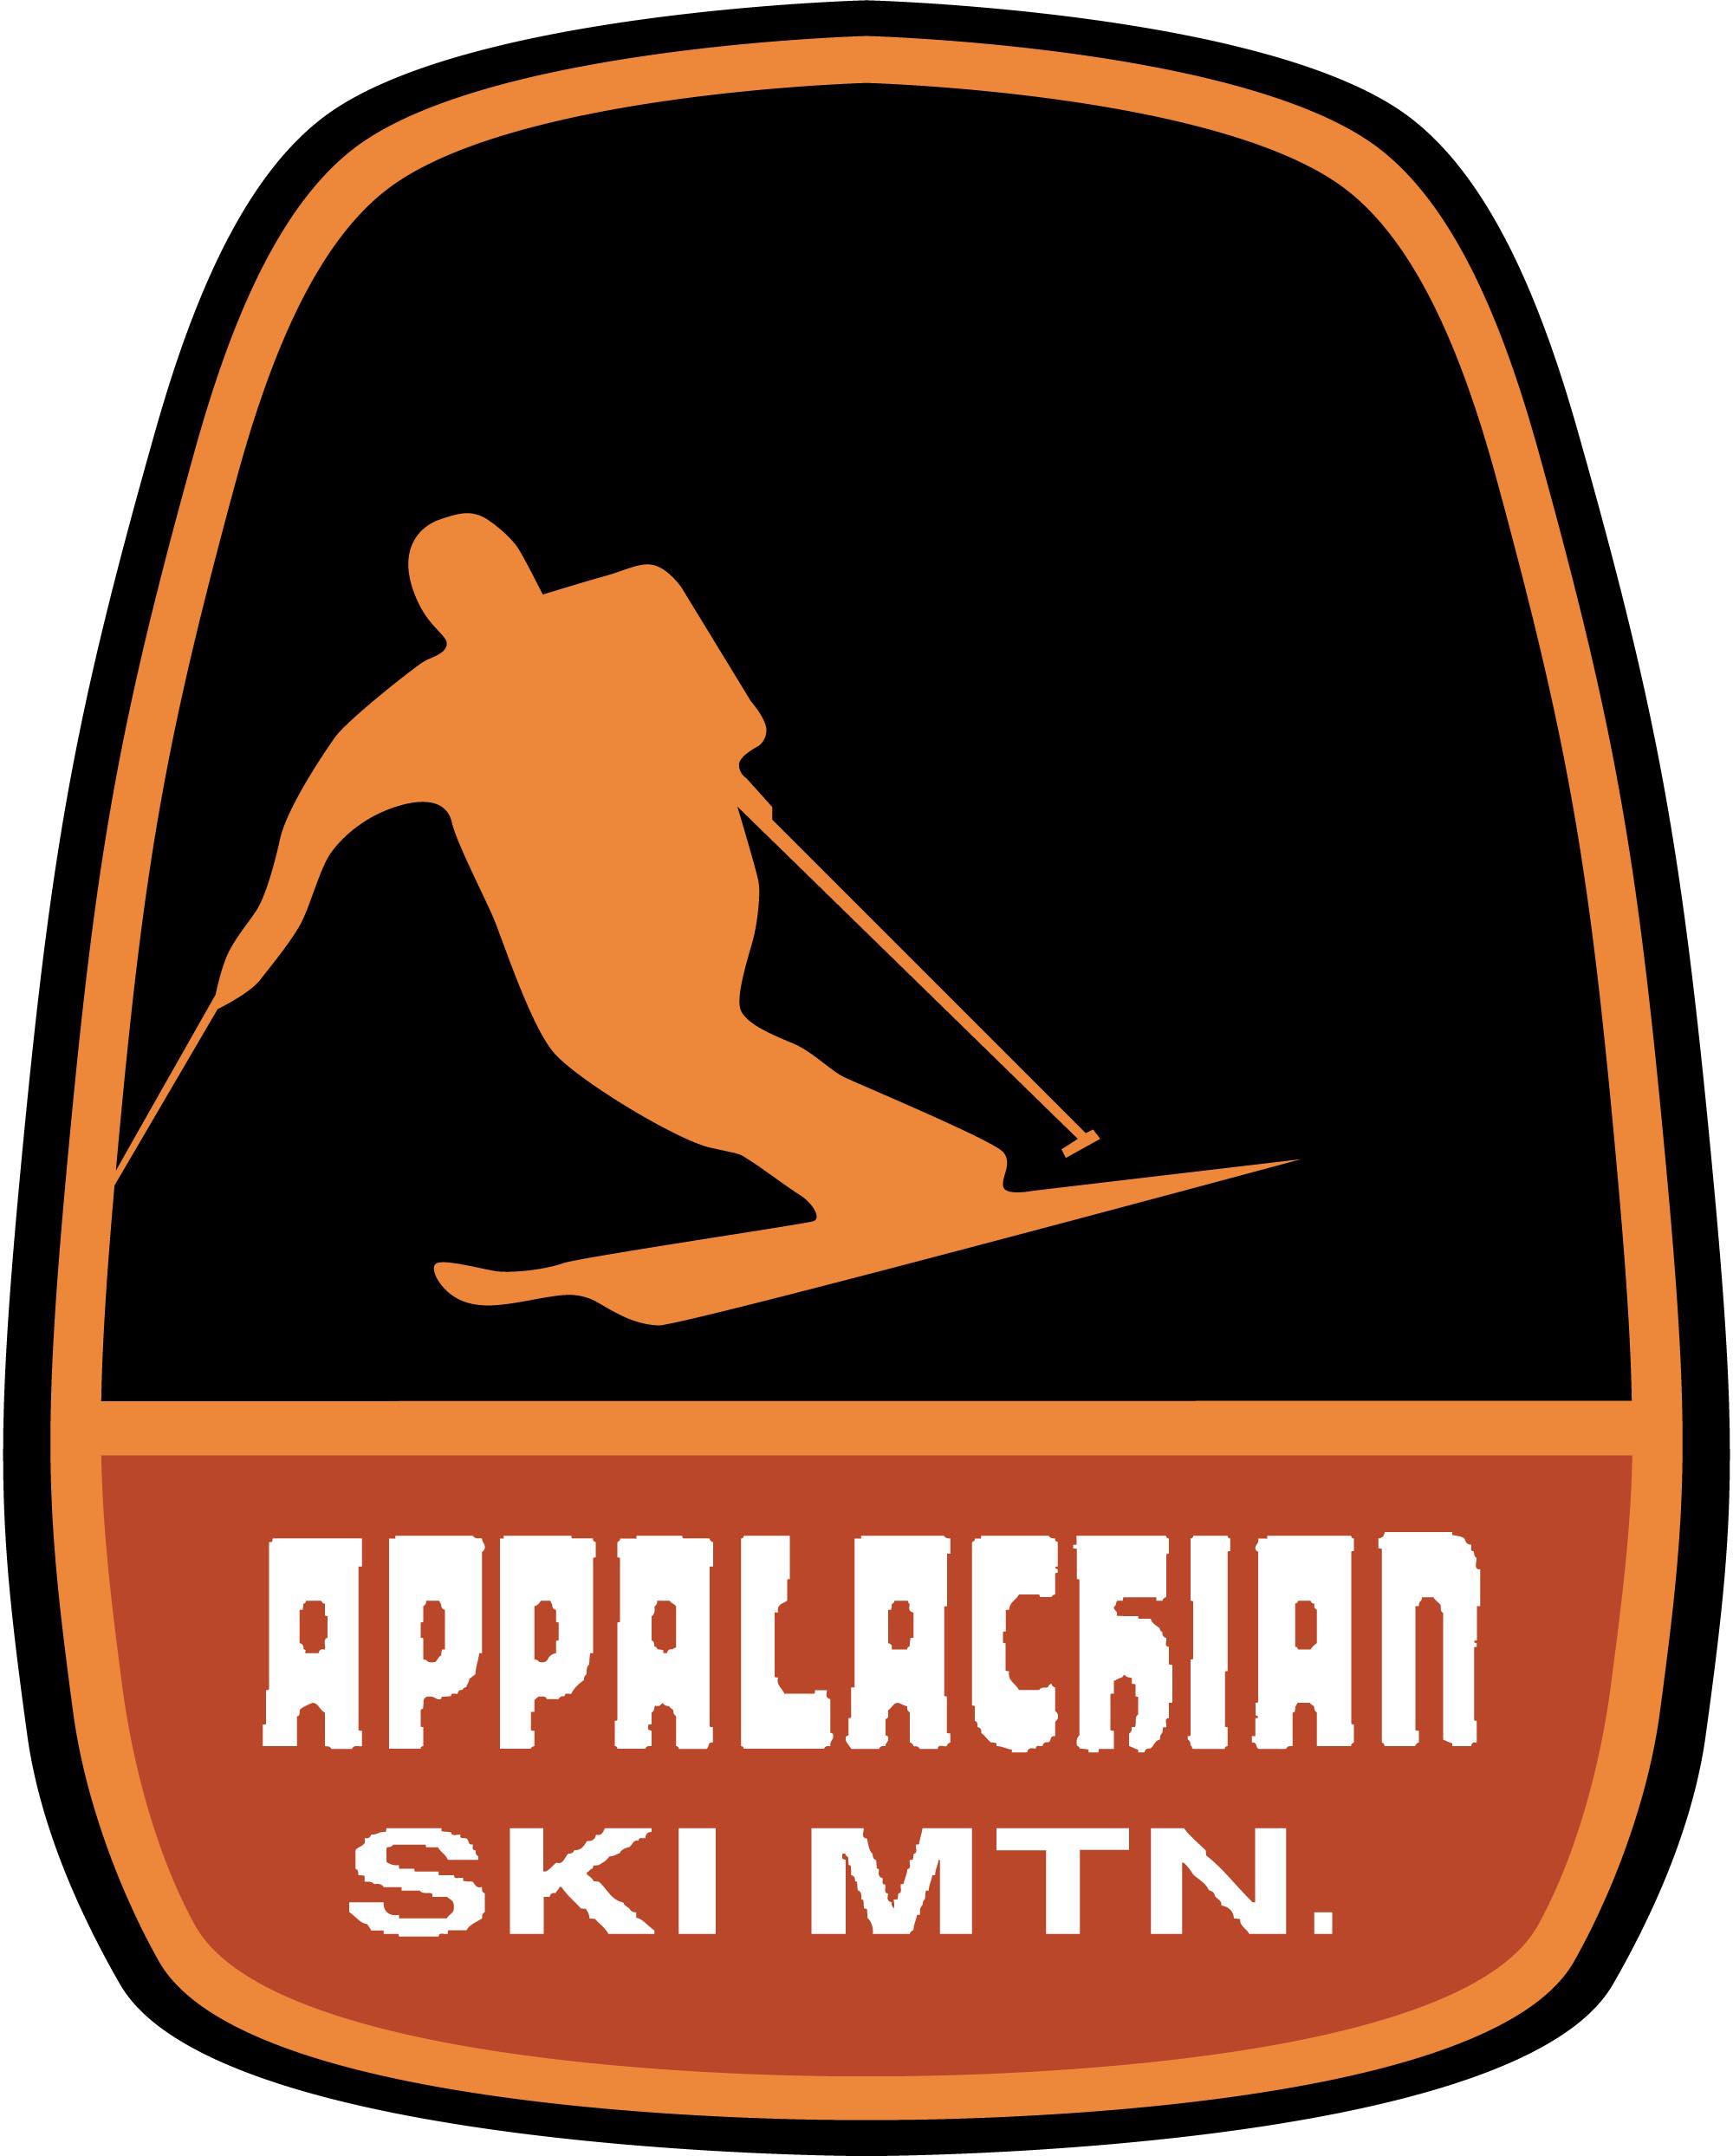 Appalachian Ski Mountain logo